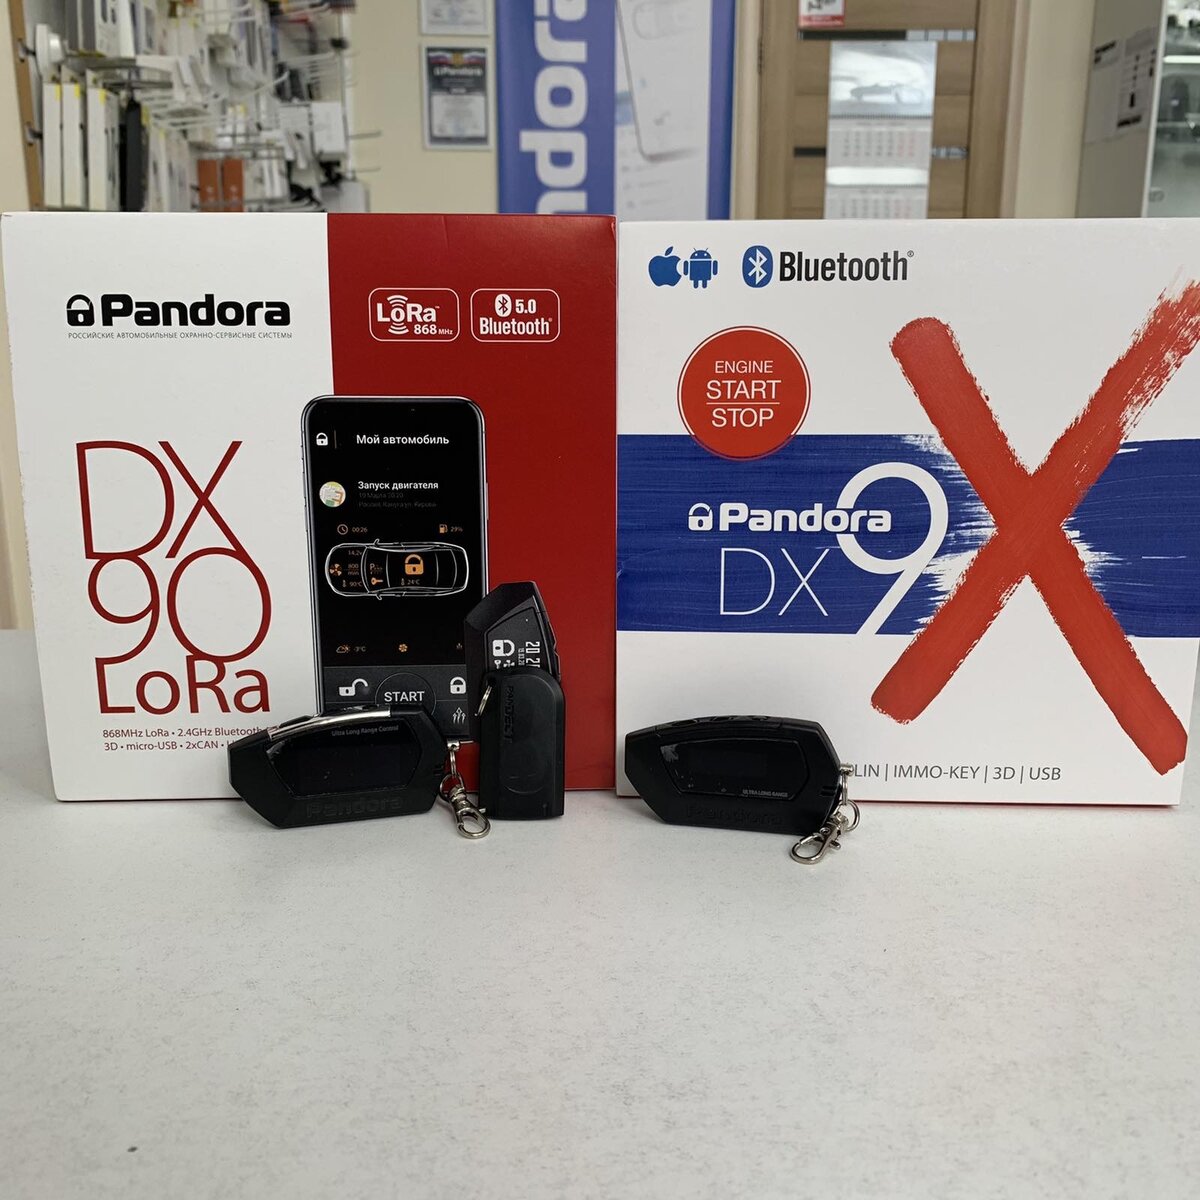 Pandora Dx9x и Pandora Dx90Lora - какую выбрать?